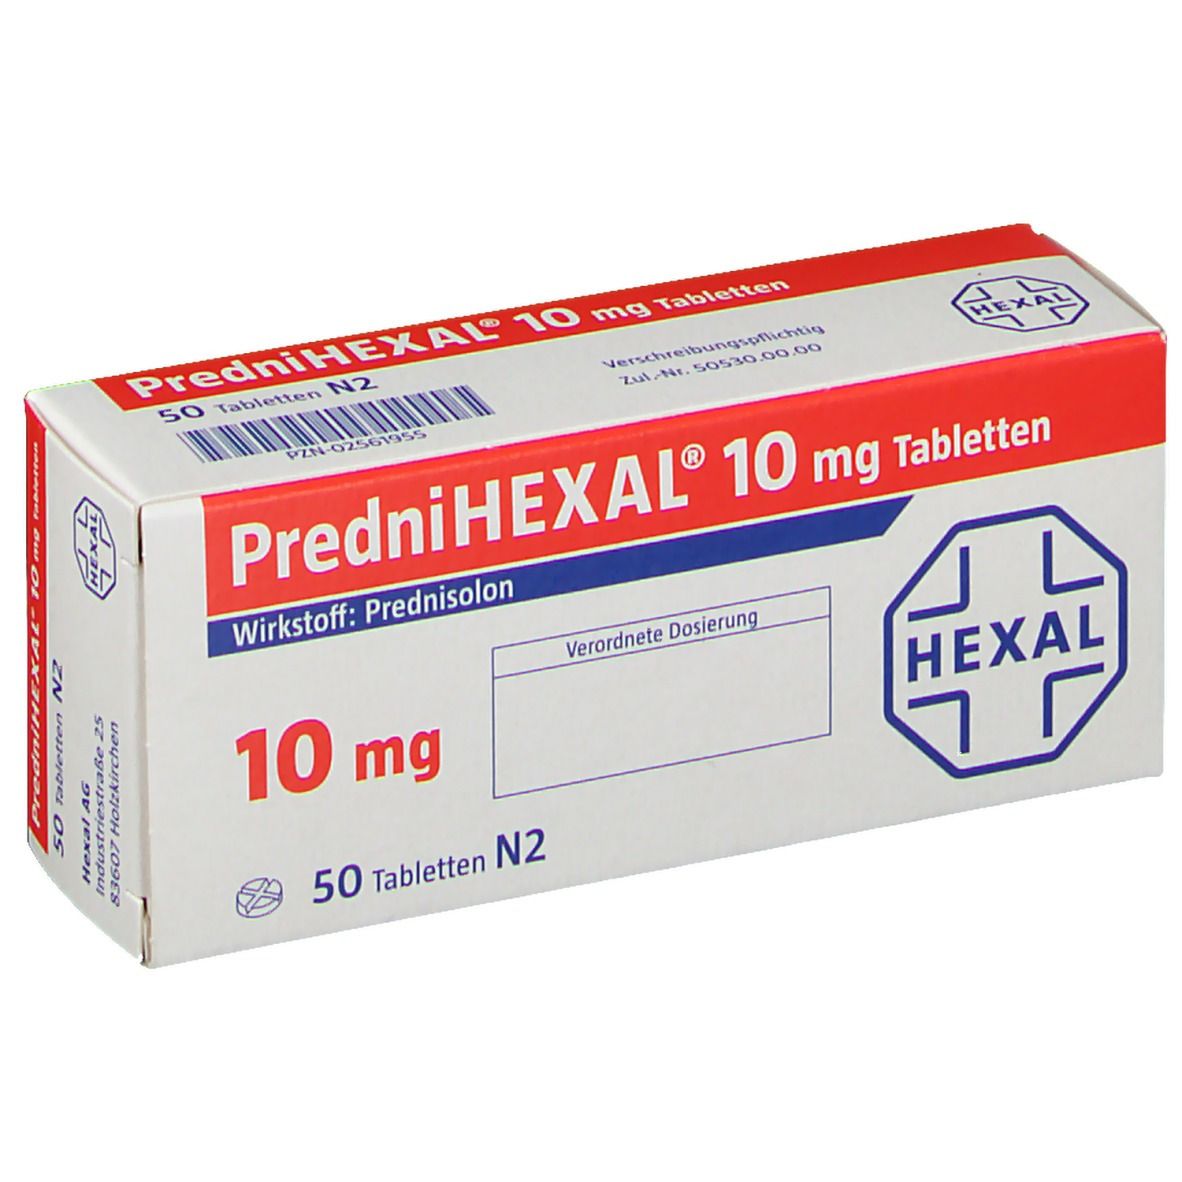 Prednihexal 10 mg Tabletten